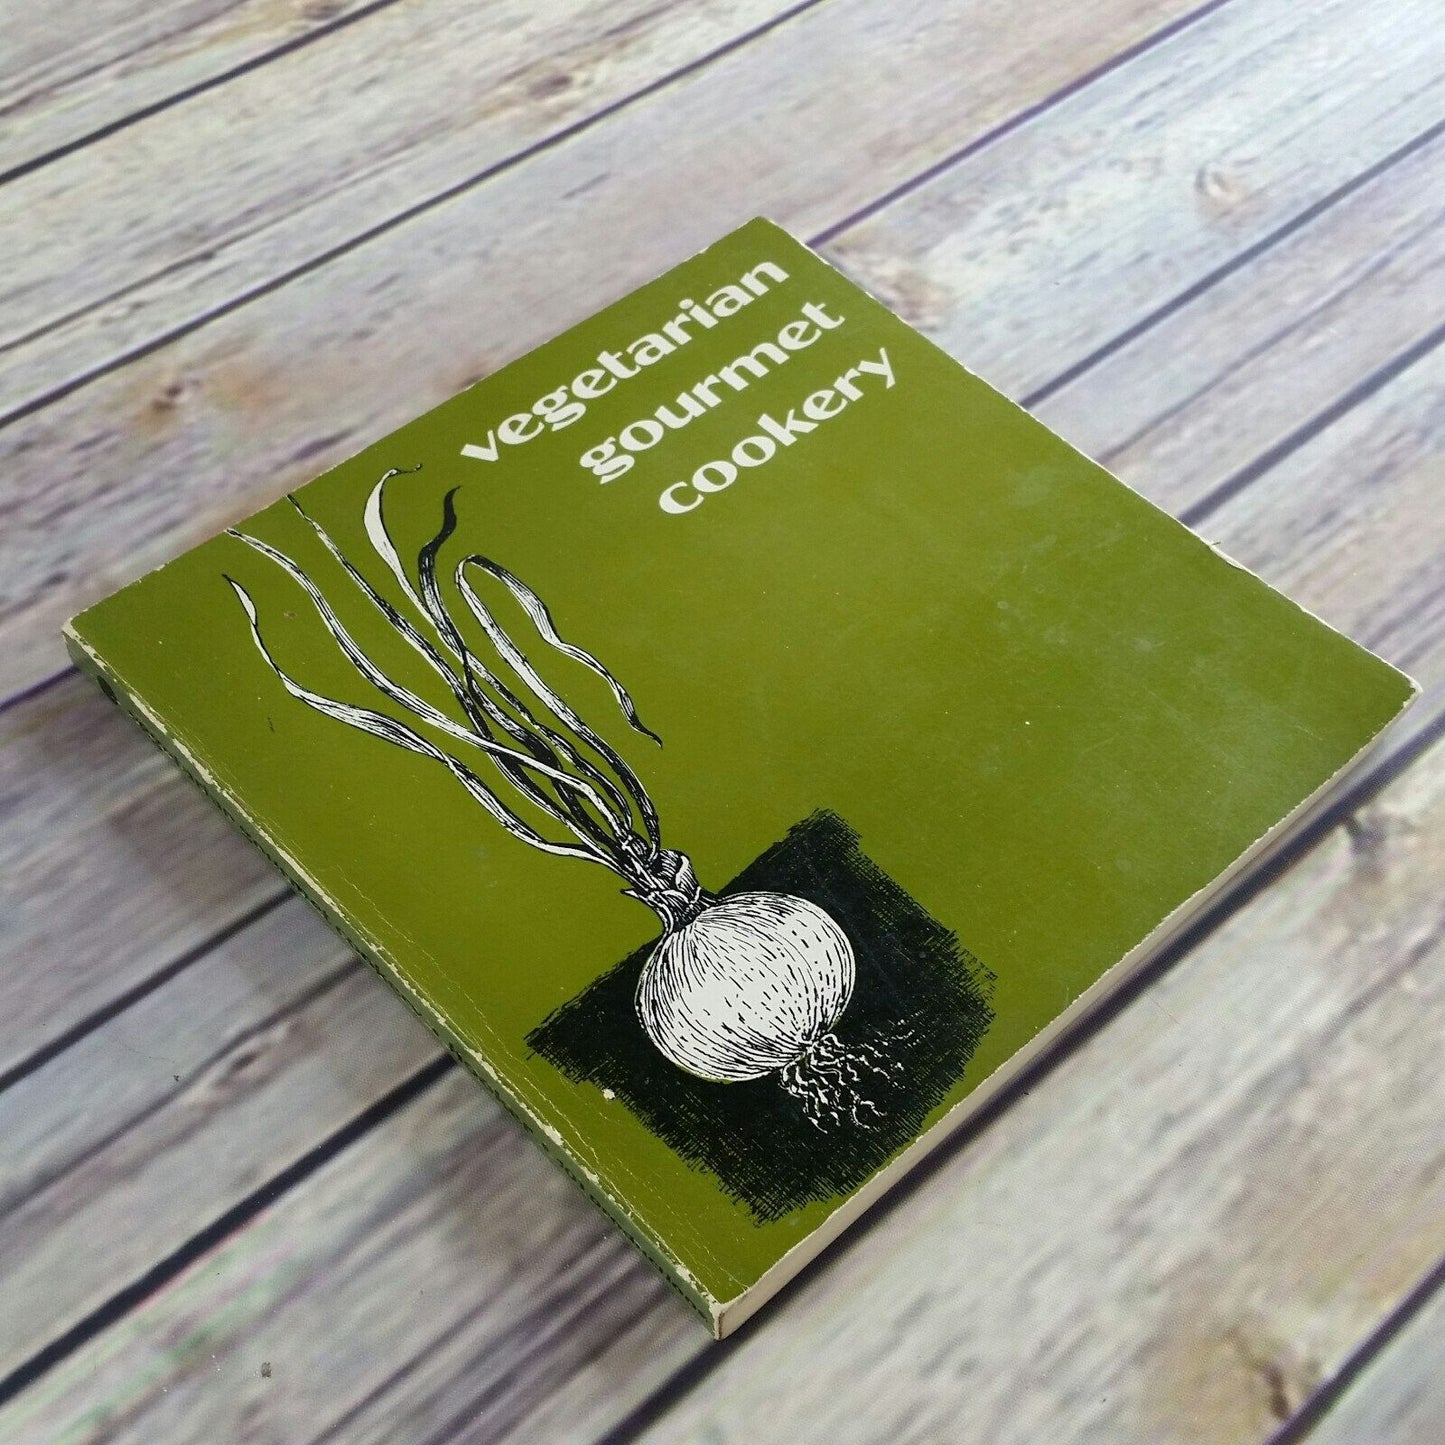 Vintage Cookbook Vegetarian Gourmet Cookery Alan Hooker 1975 Paperback Vegetarian Recipes Illustrated